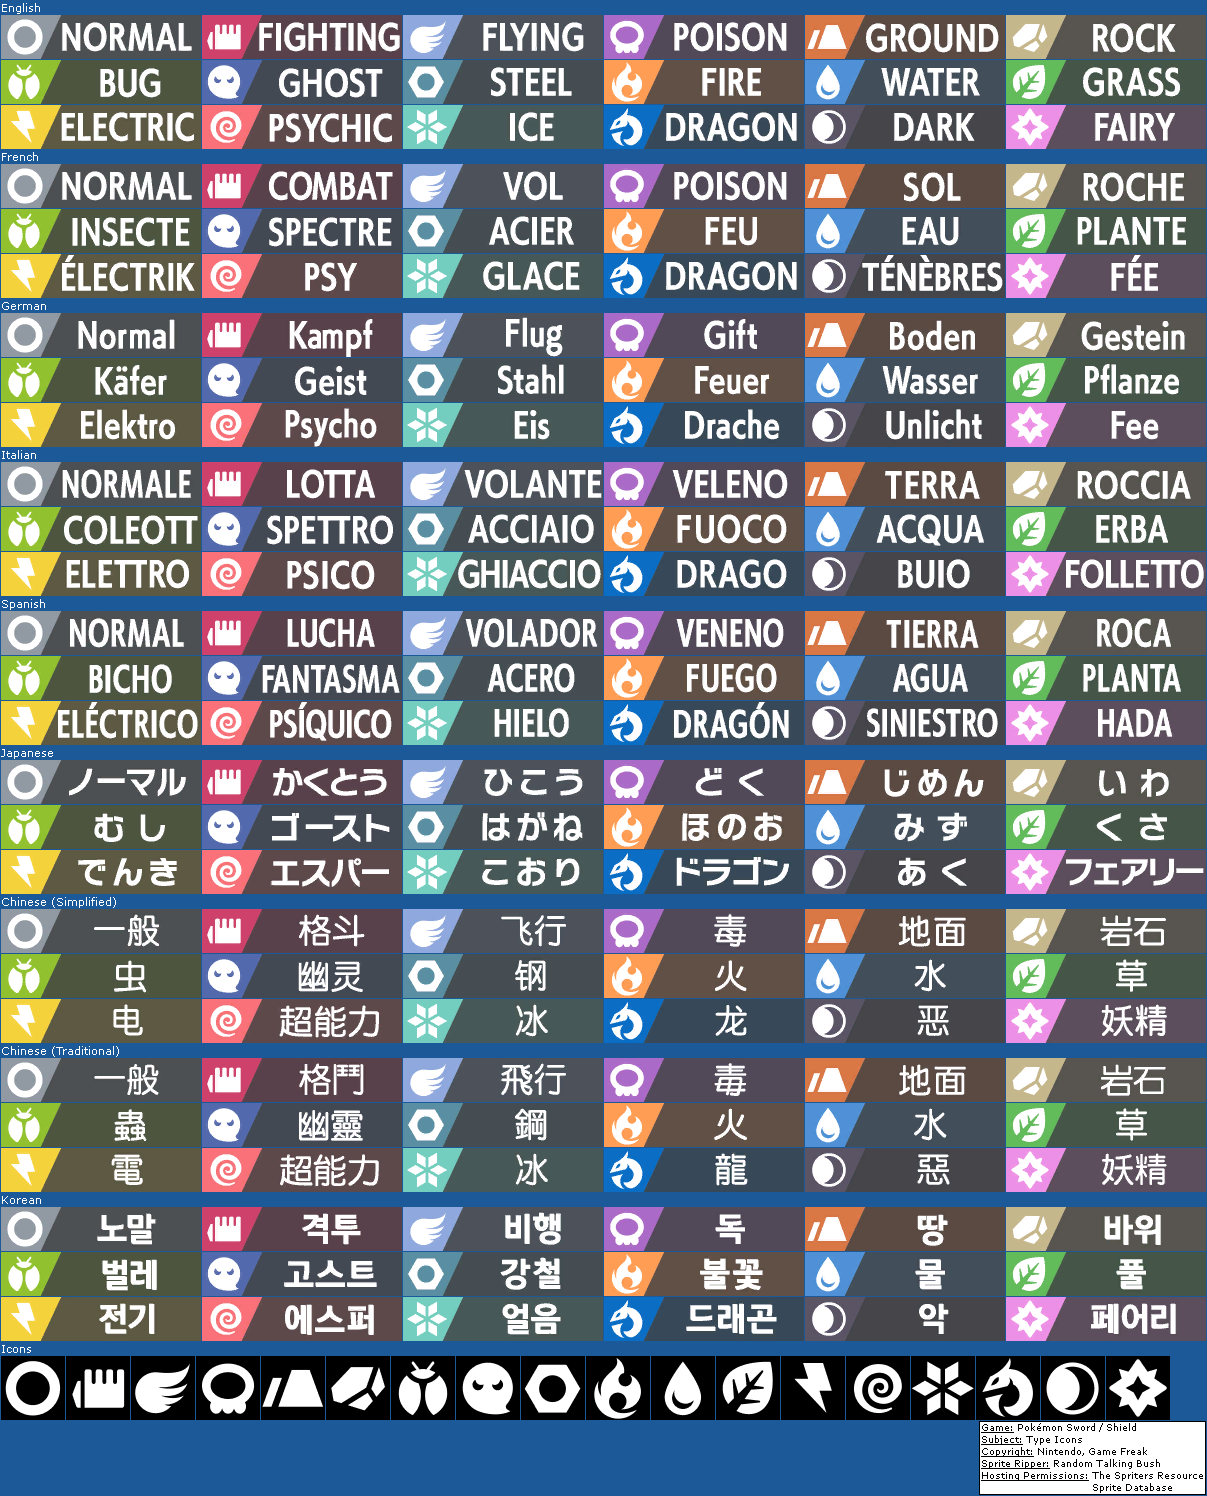 Pokémon Sword / Shield - Type Icons